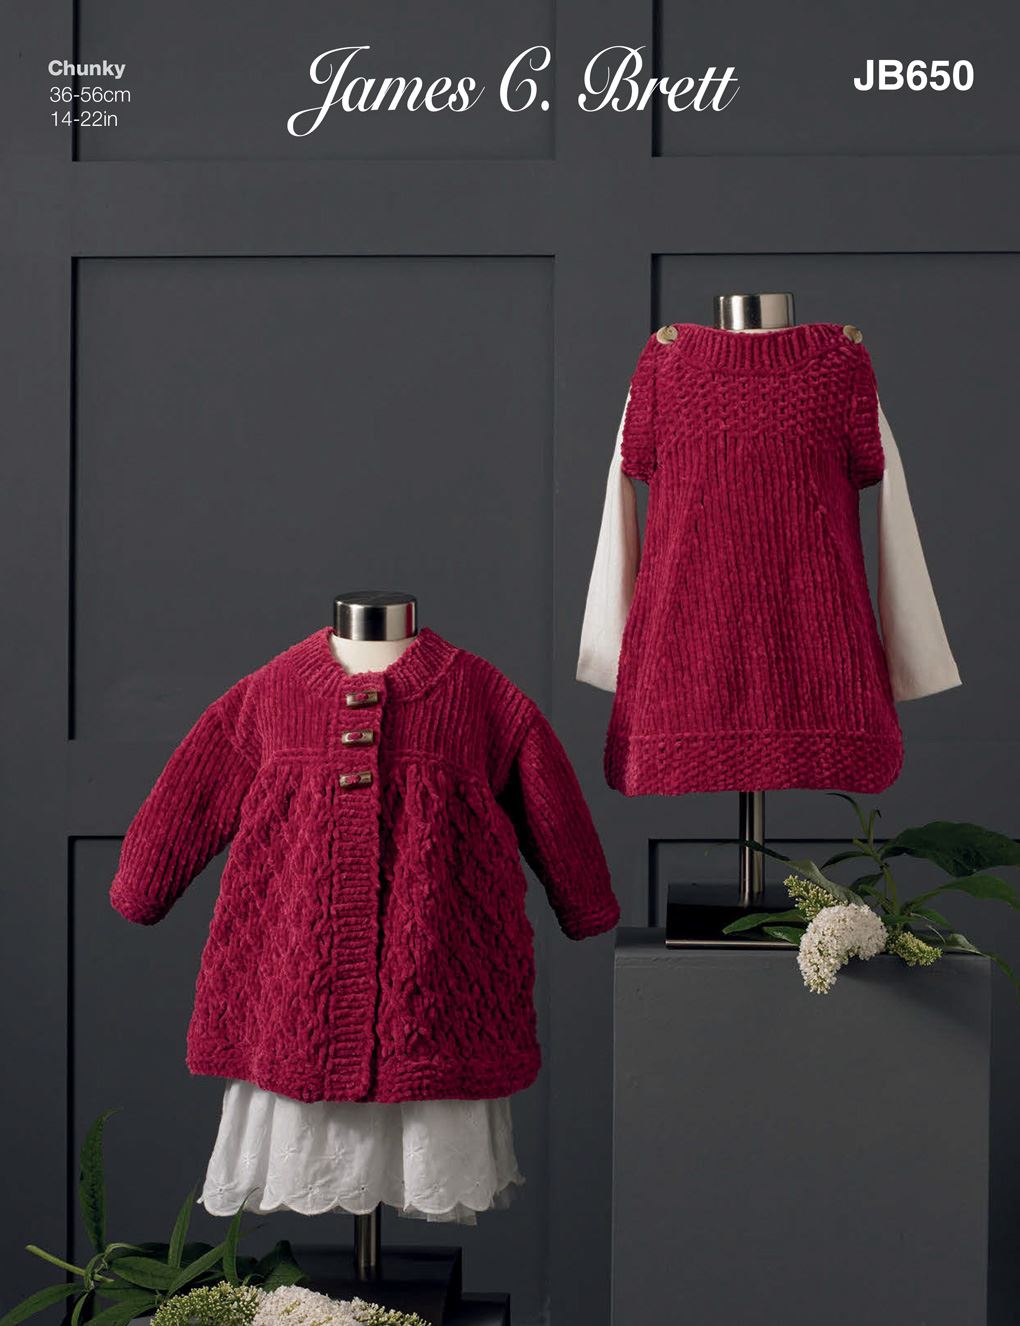 James C Brett Flutterby knitting pattern (JB650) dress and jacket